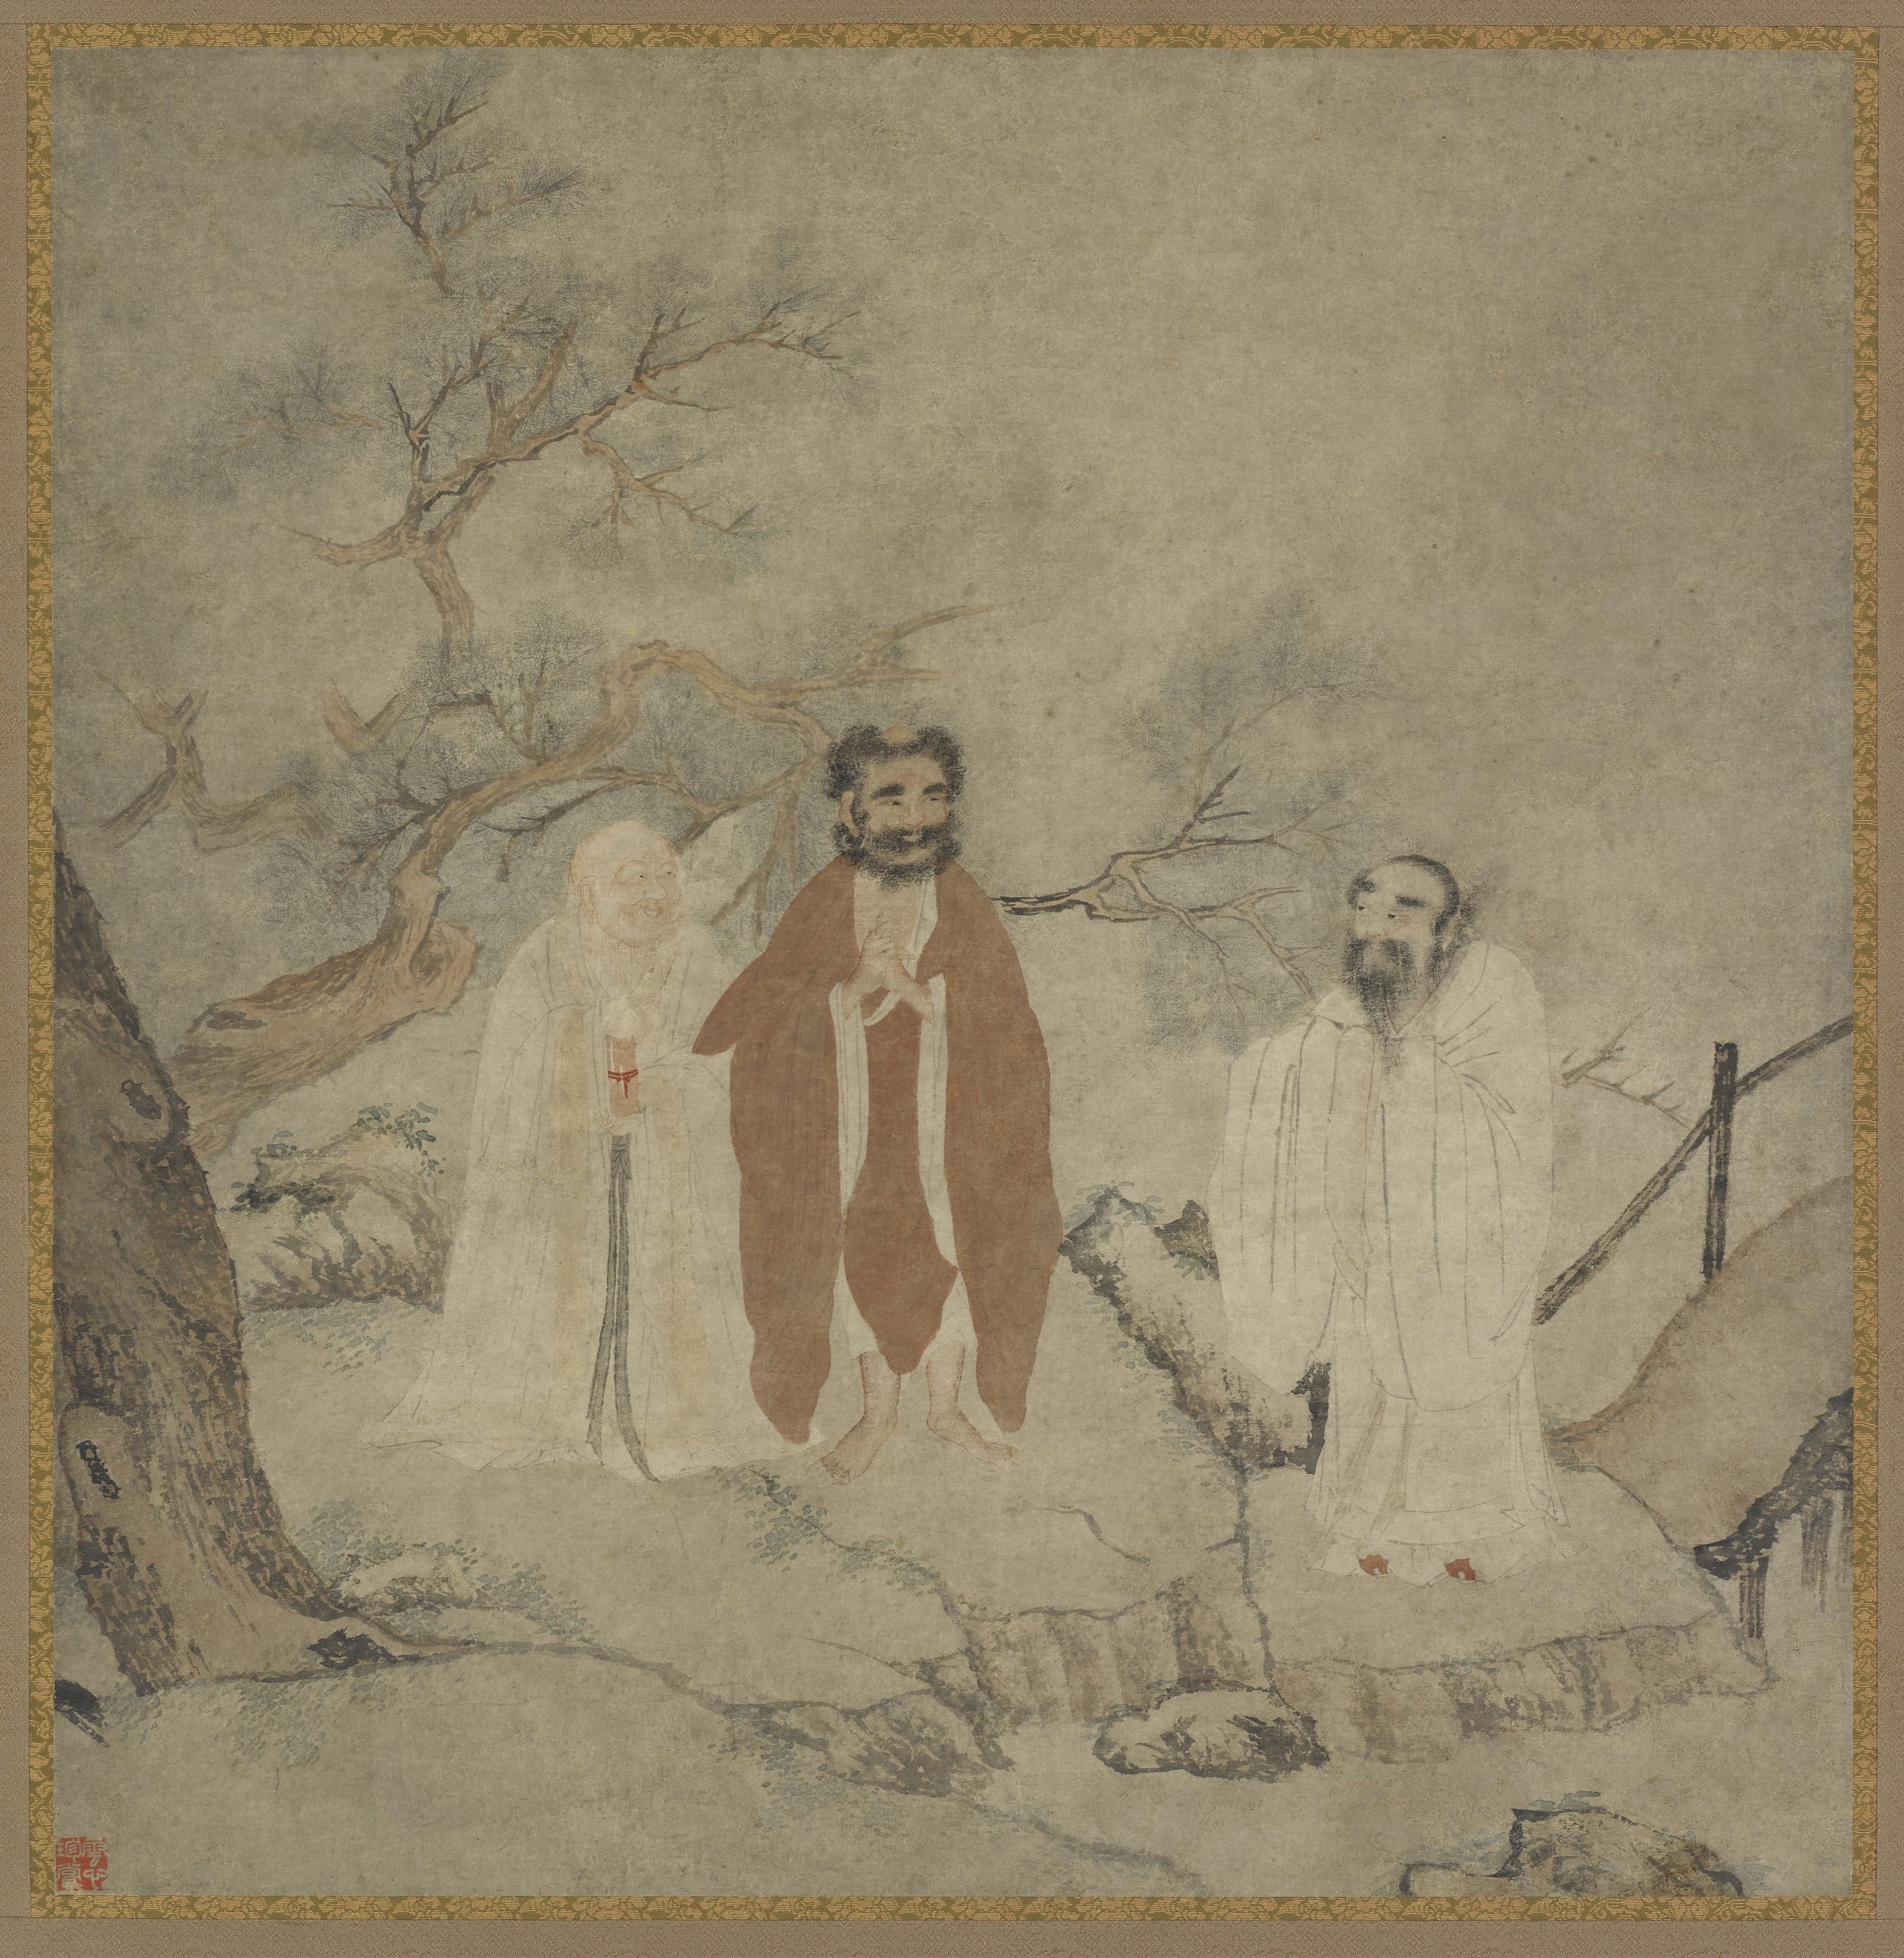 illustration of 3 men in robes in a garden